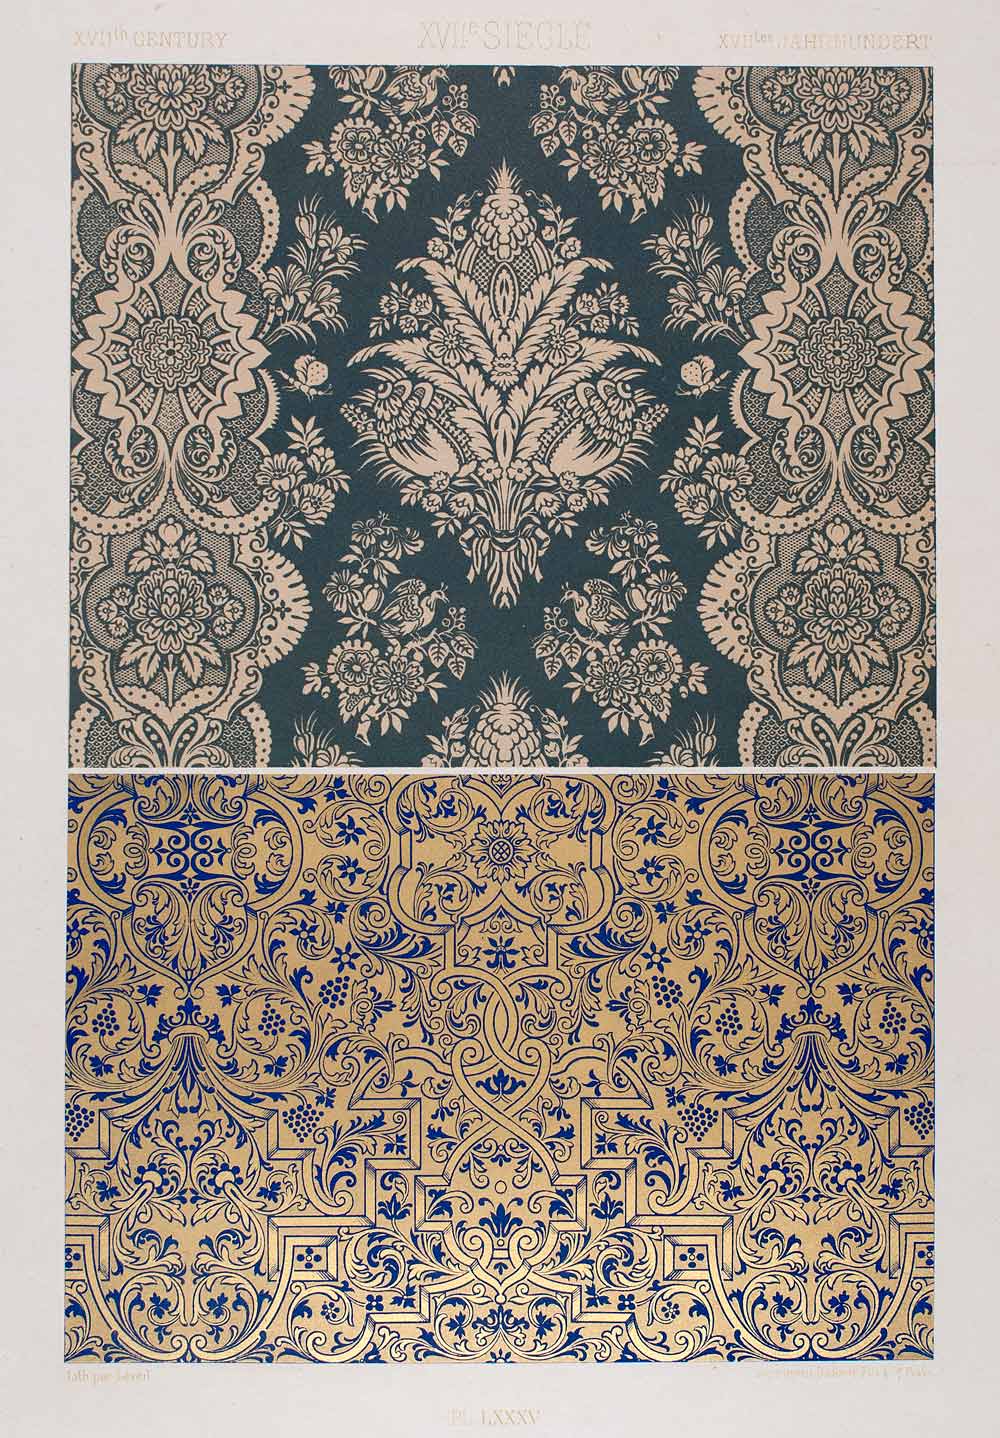 1875 Chromolithograph 17th Century Design Pattern Motif Decorative Acanthus LOR1